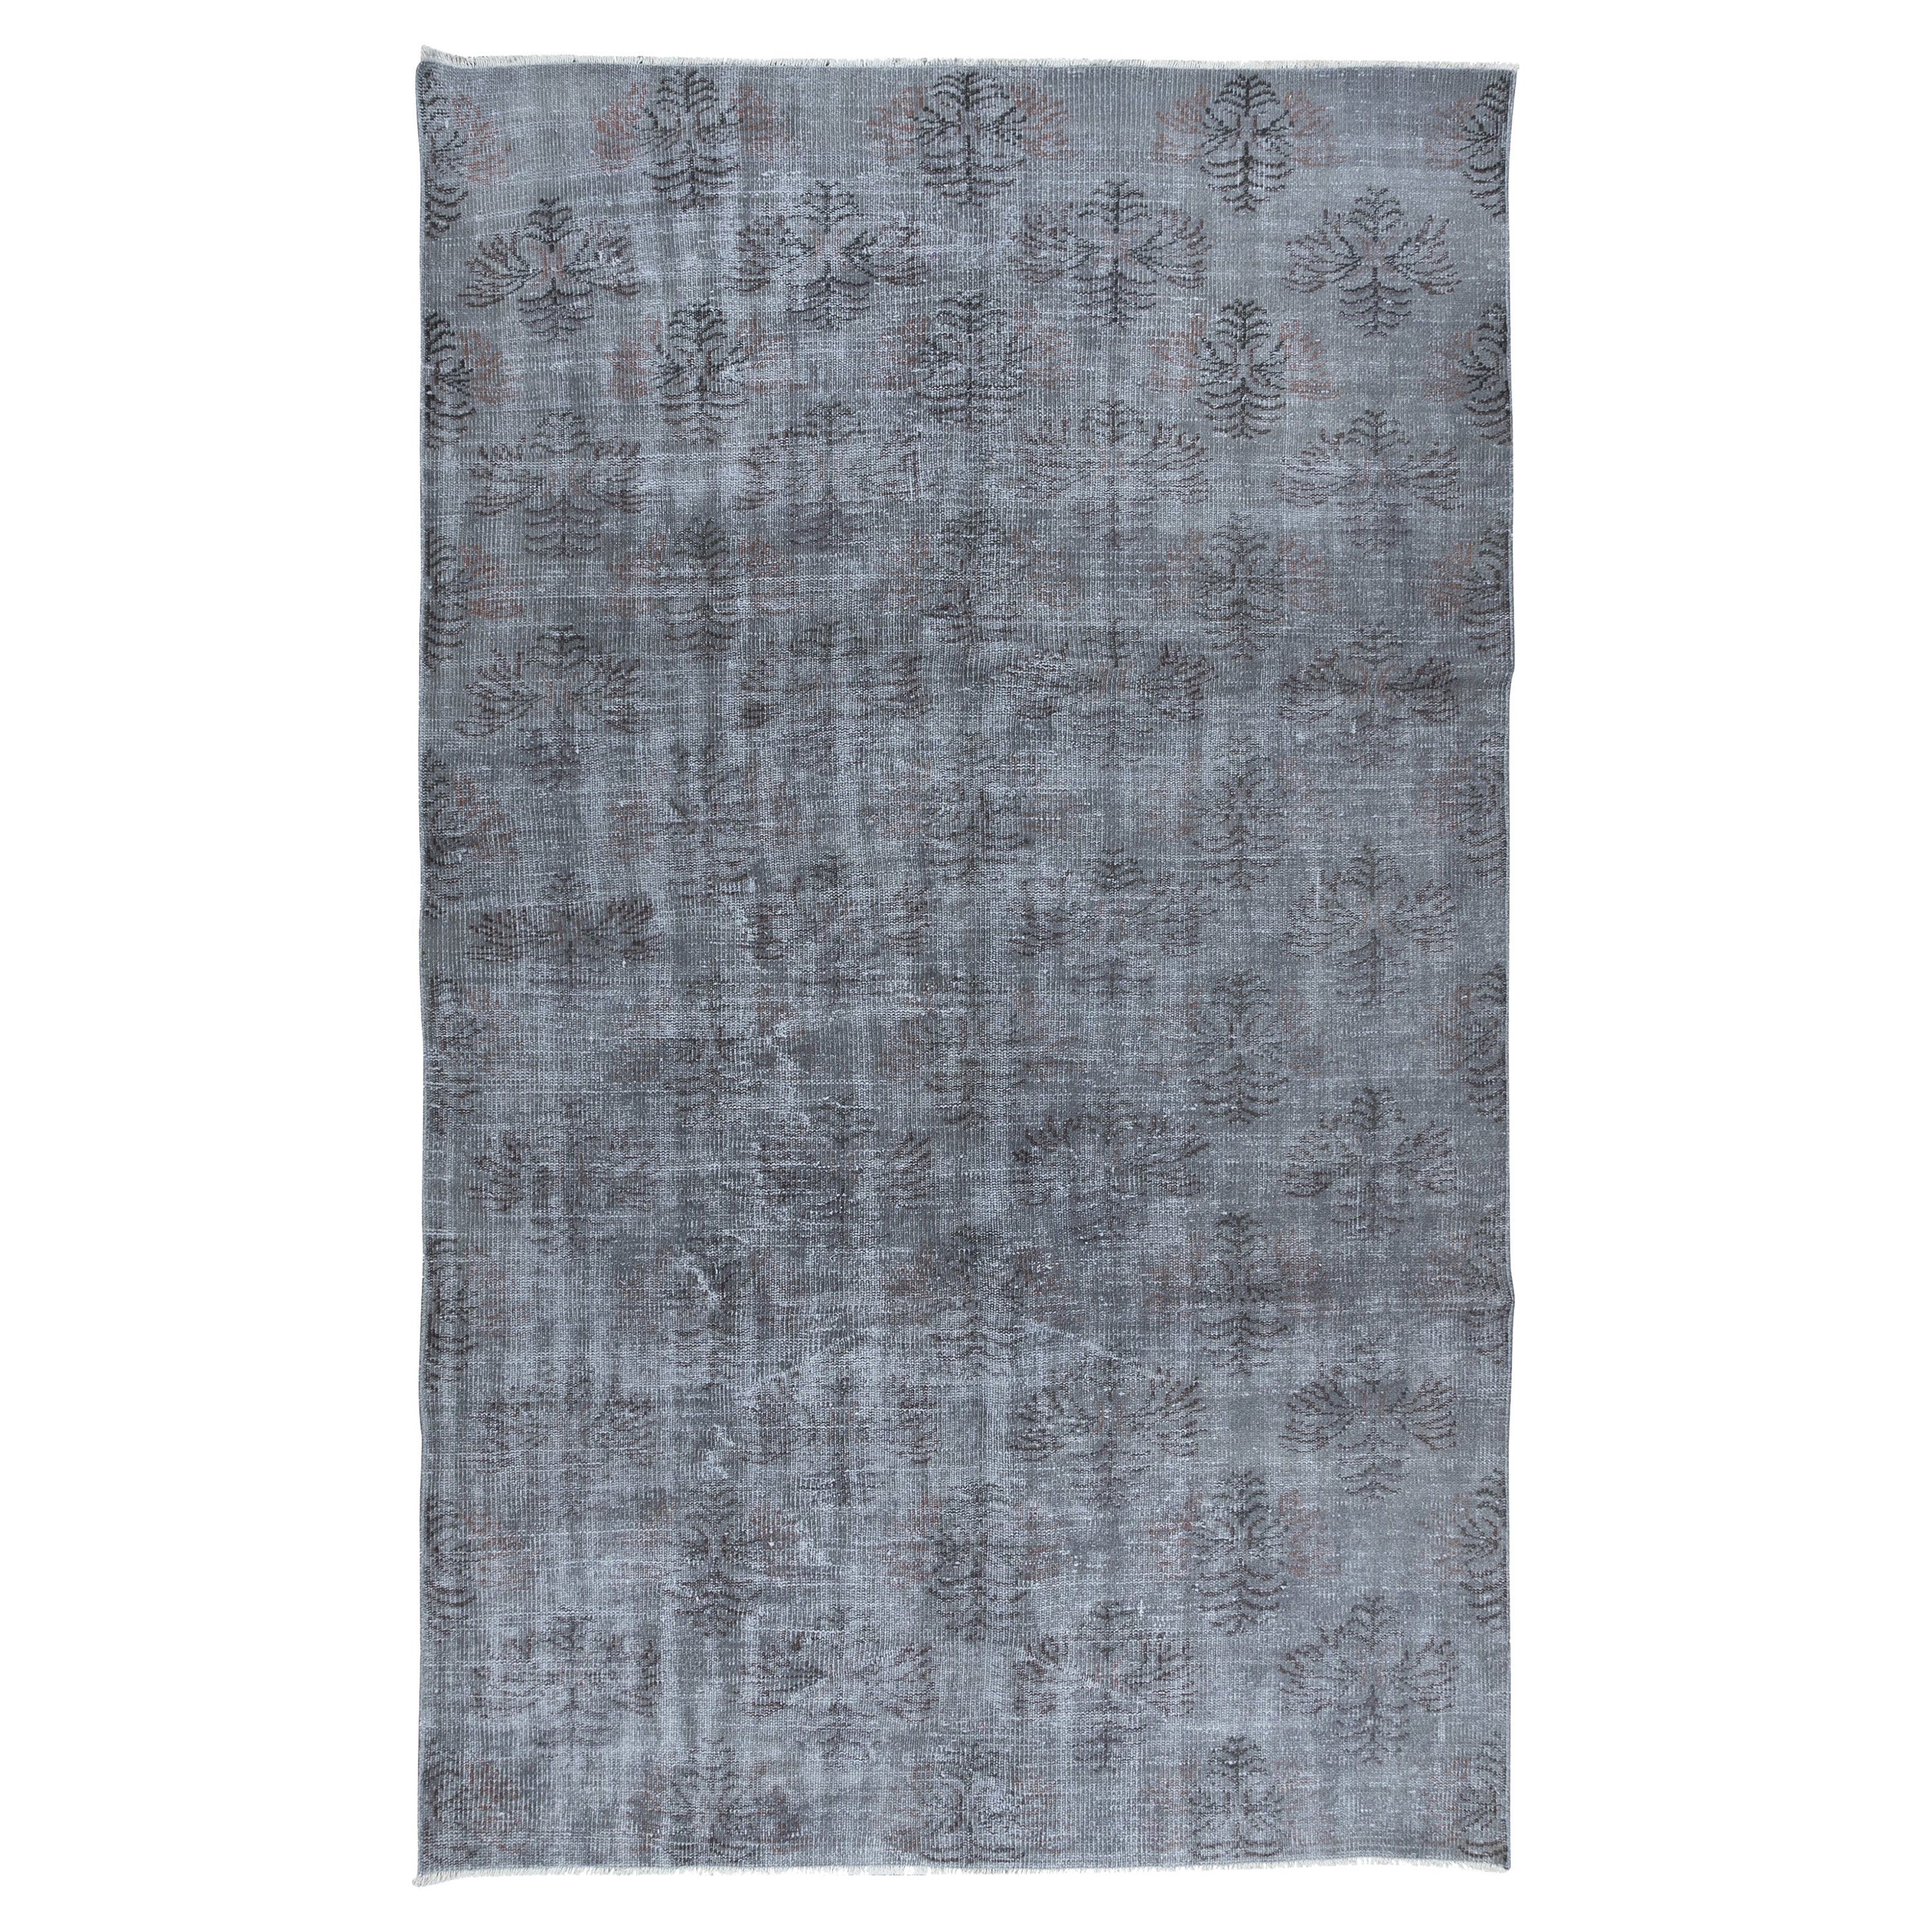 5.6x9 Ft Handmade Gray Rug for Entryway. Modern Turkish Carpet for Living Room For Sale